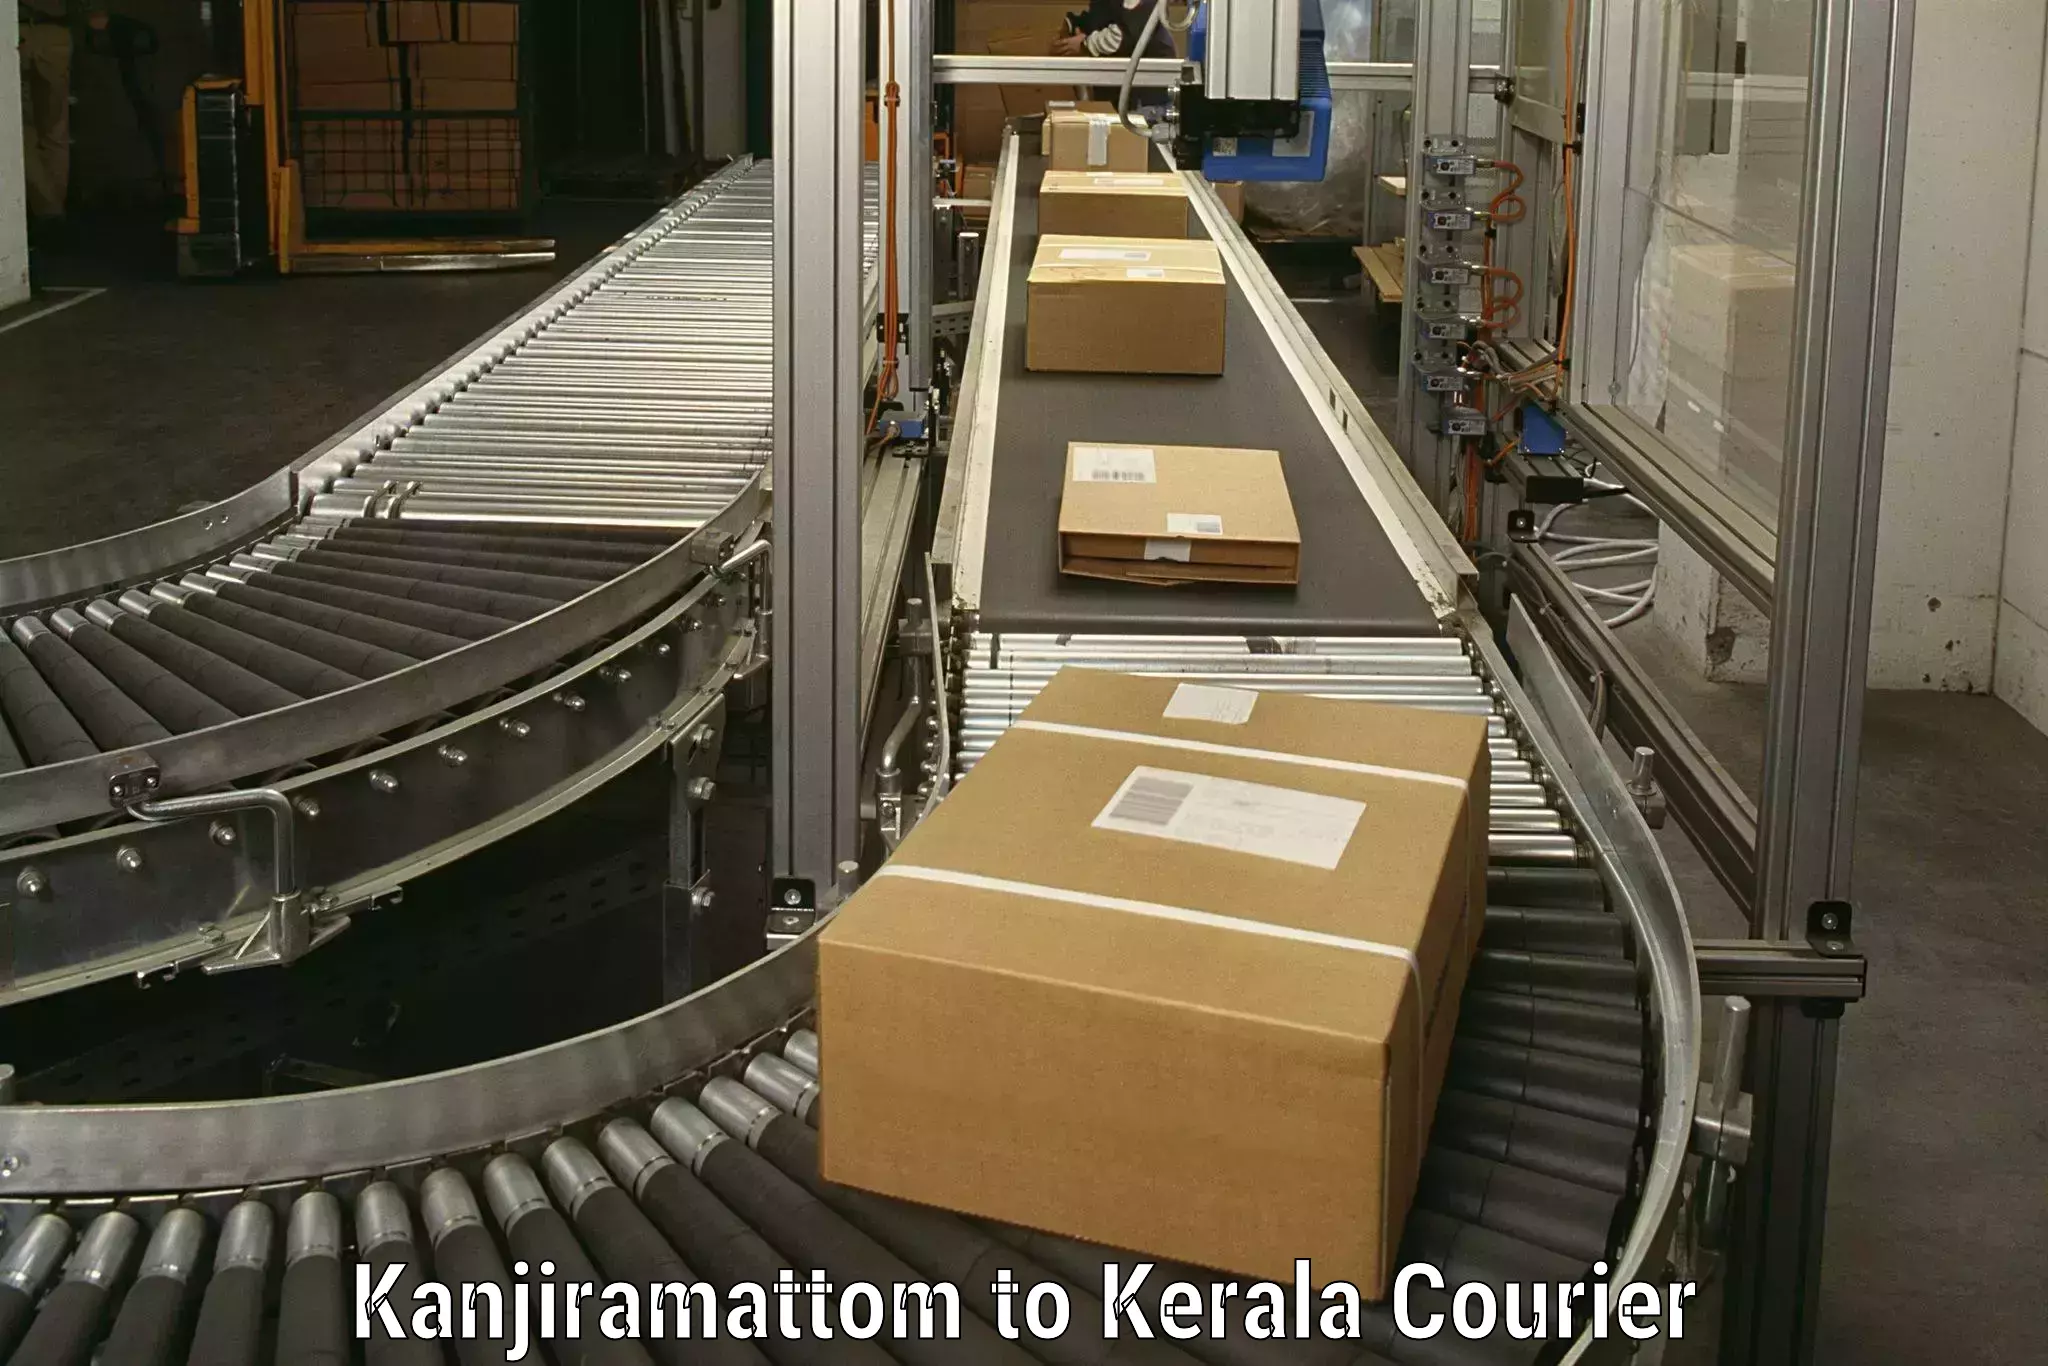 Budget-friendly movers in Kanjiramattom to Kerala